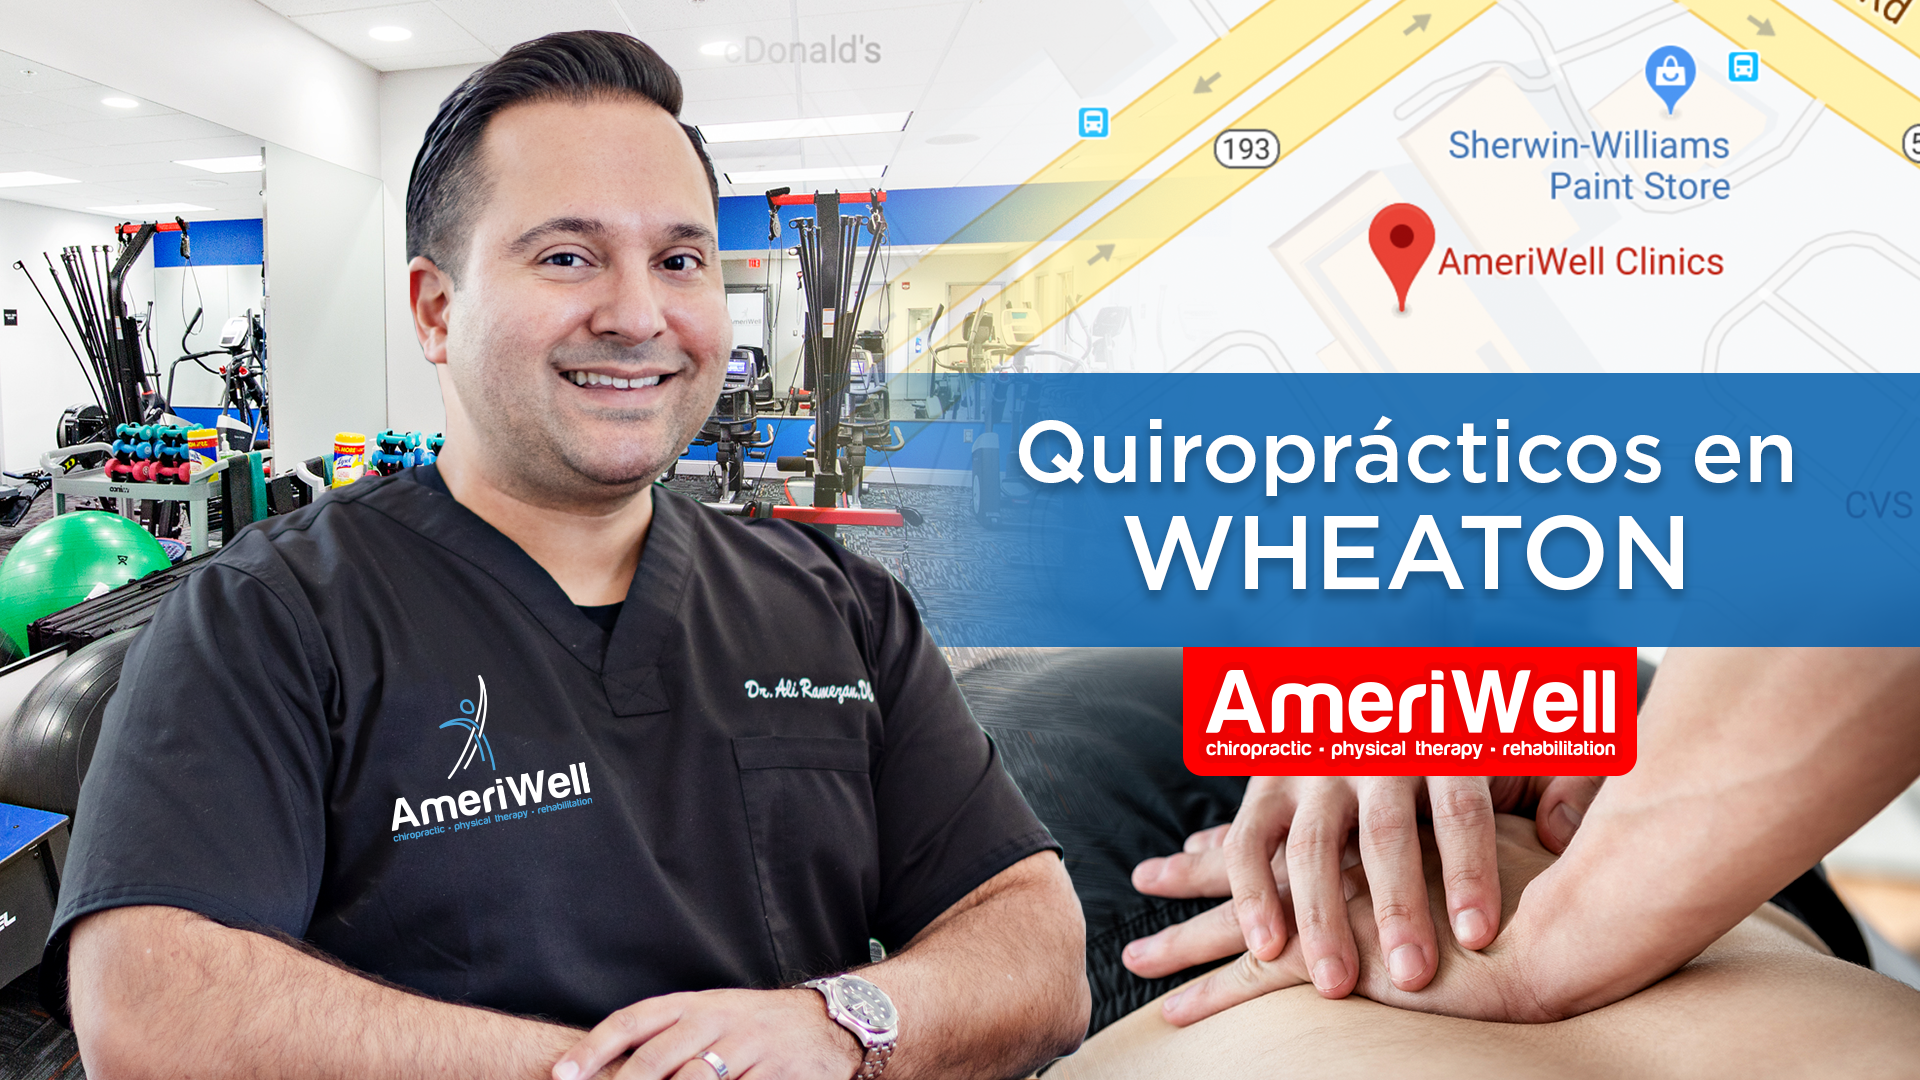 Wheaton – Ameriwell Clinics los mejores Quiropracticos